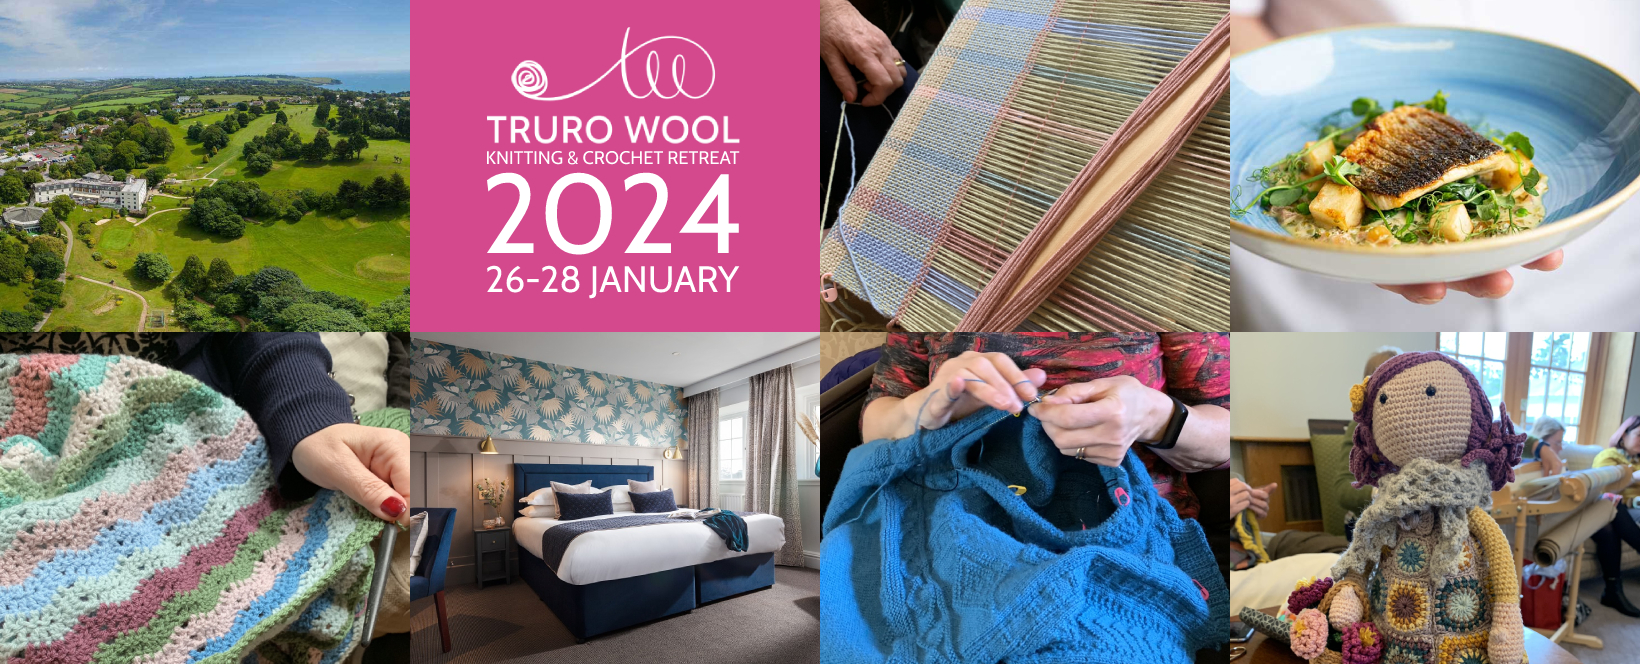 The Truro Wool Knitting & Crochet Retreat 2024 Truro Wool